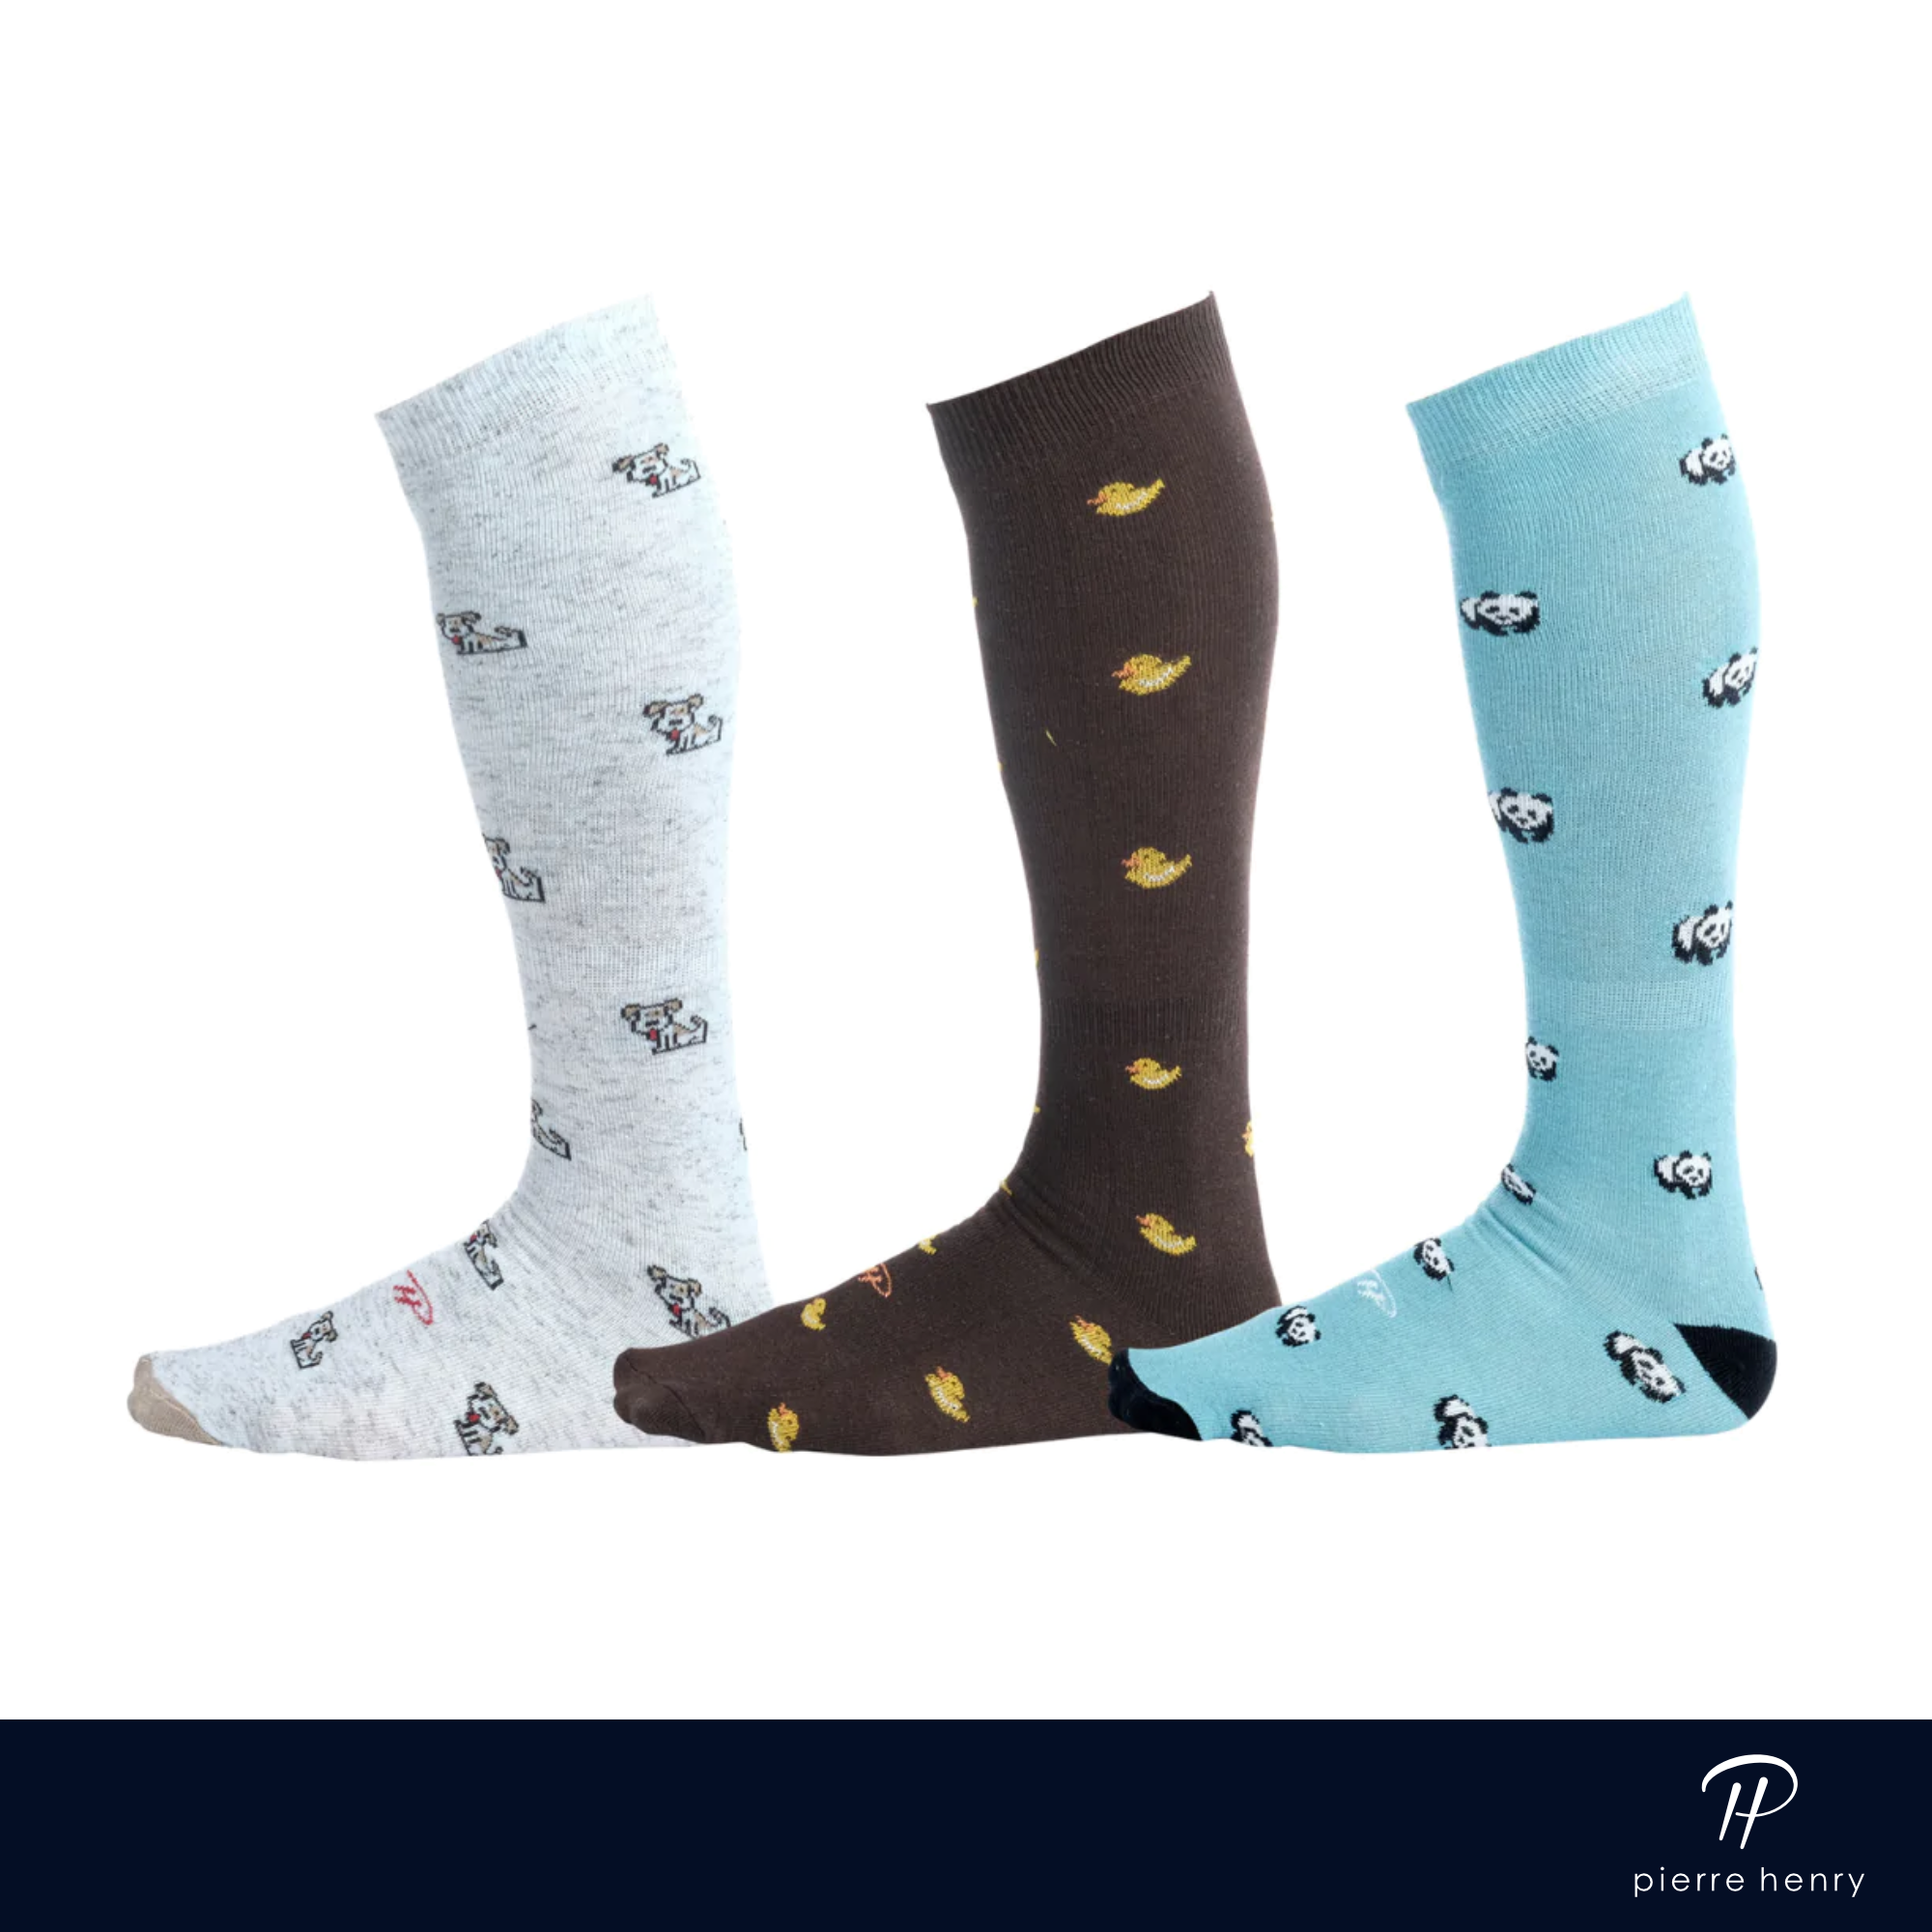 light grey dress socks with dog print, brown dress socks with duck print, light blue dress socks with penguin print